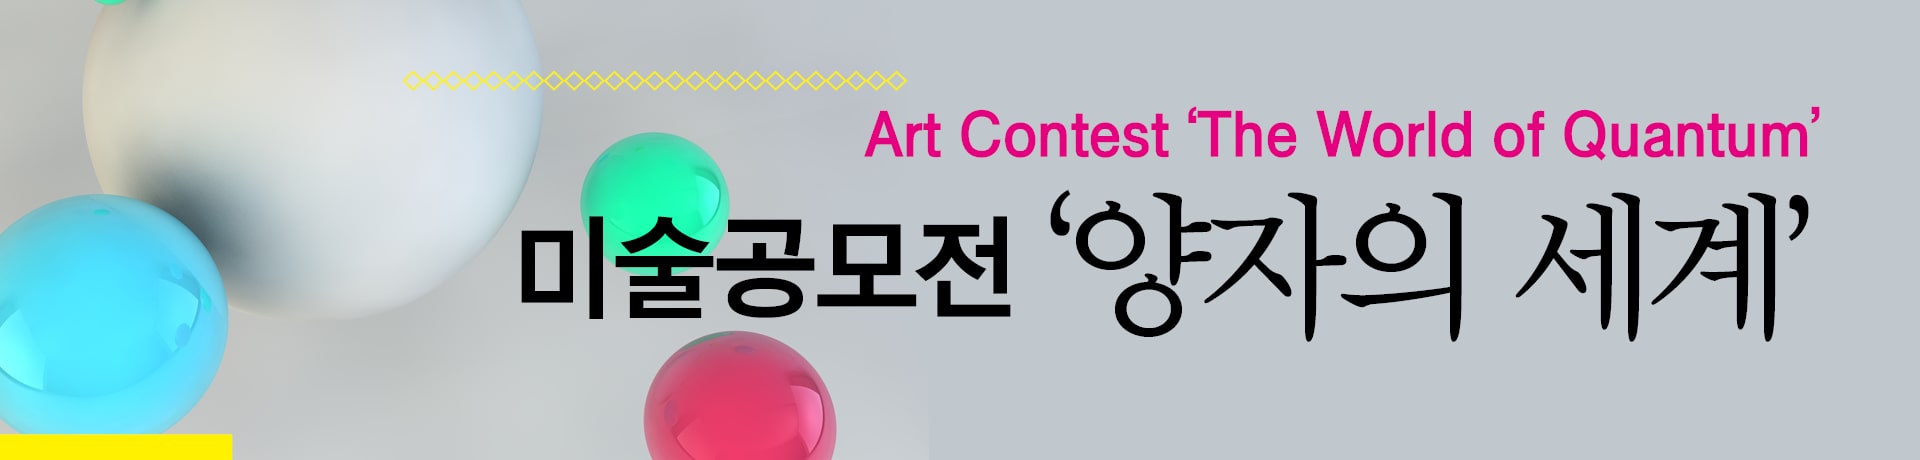 Art Contest Banner